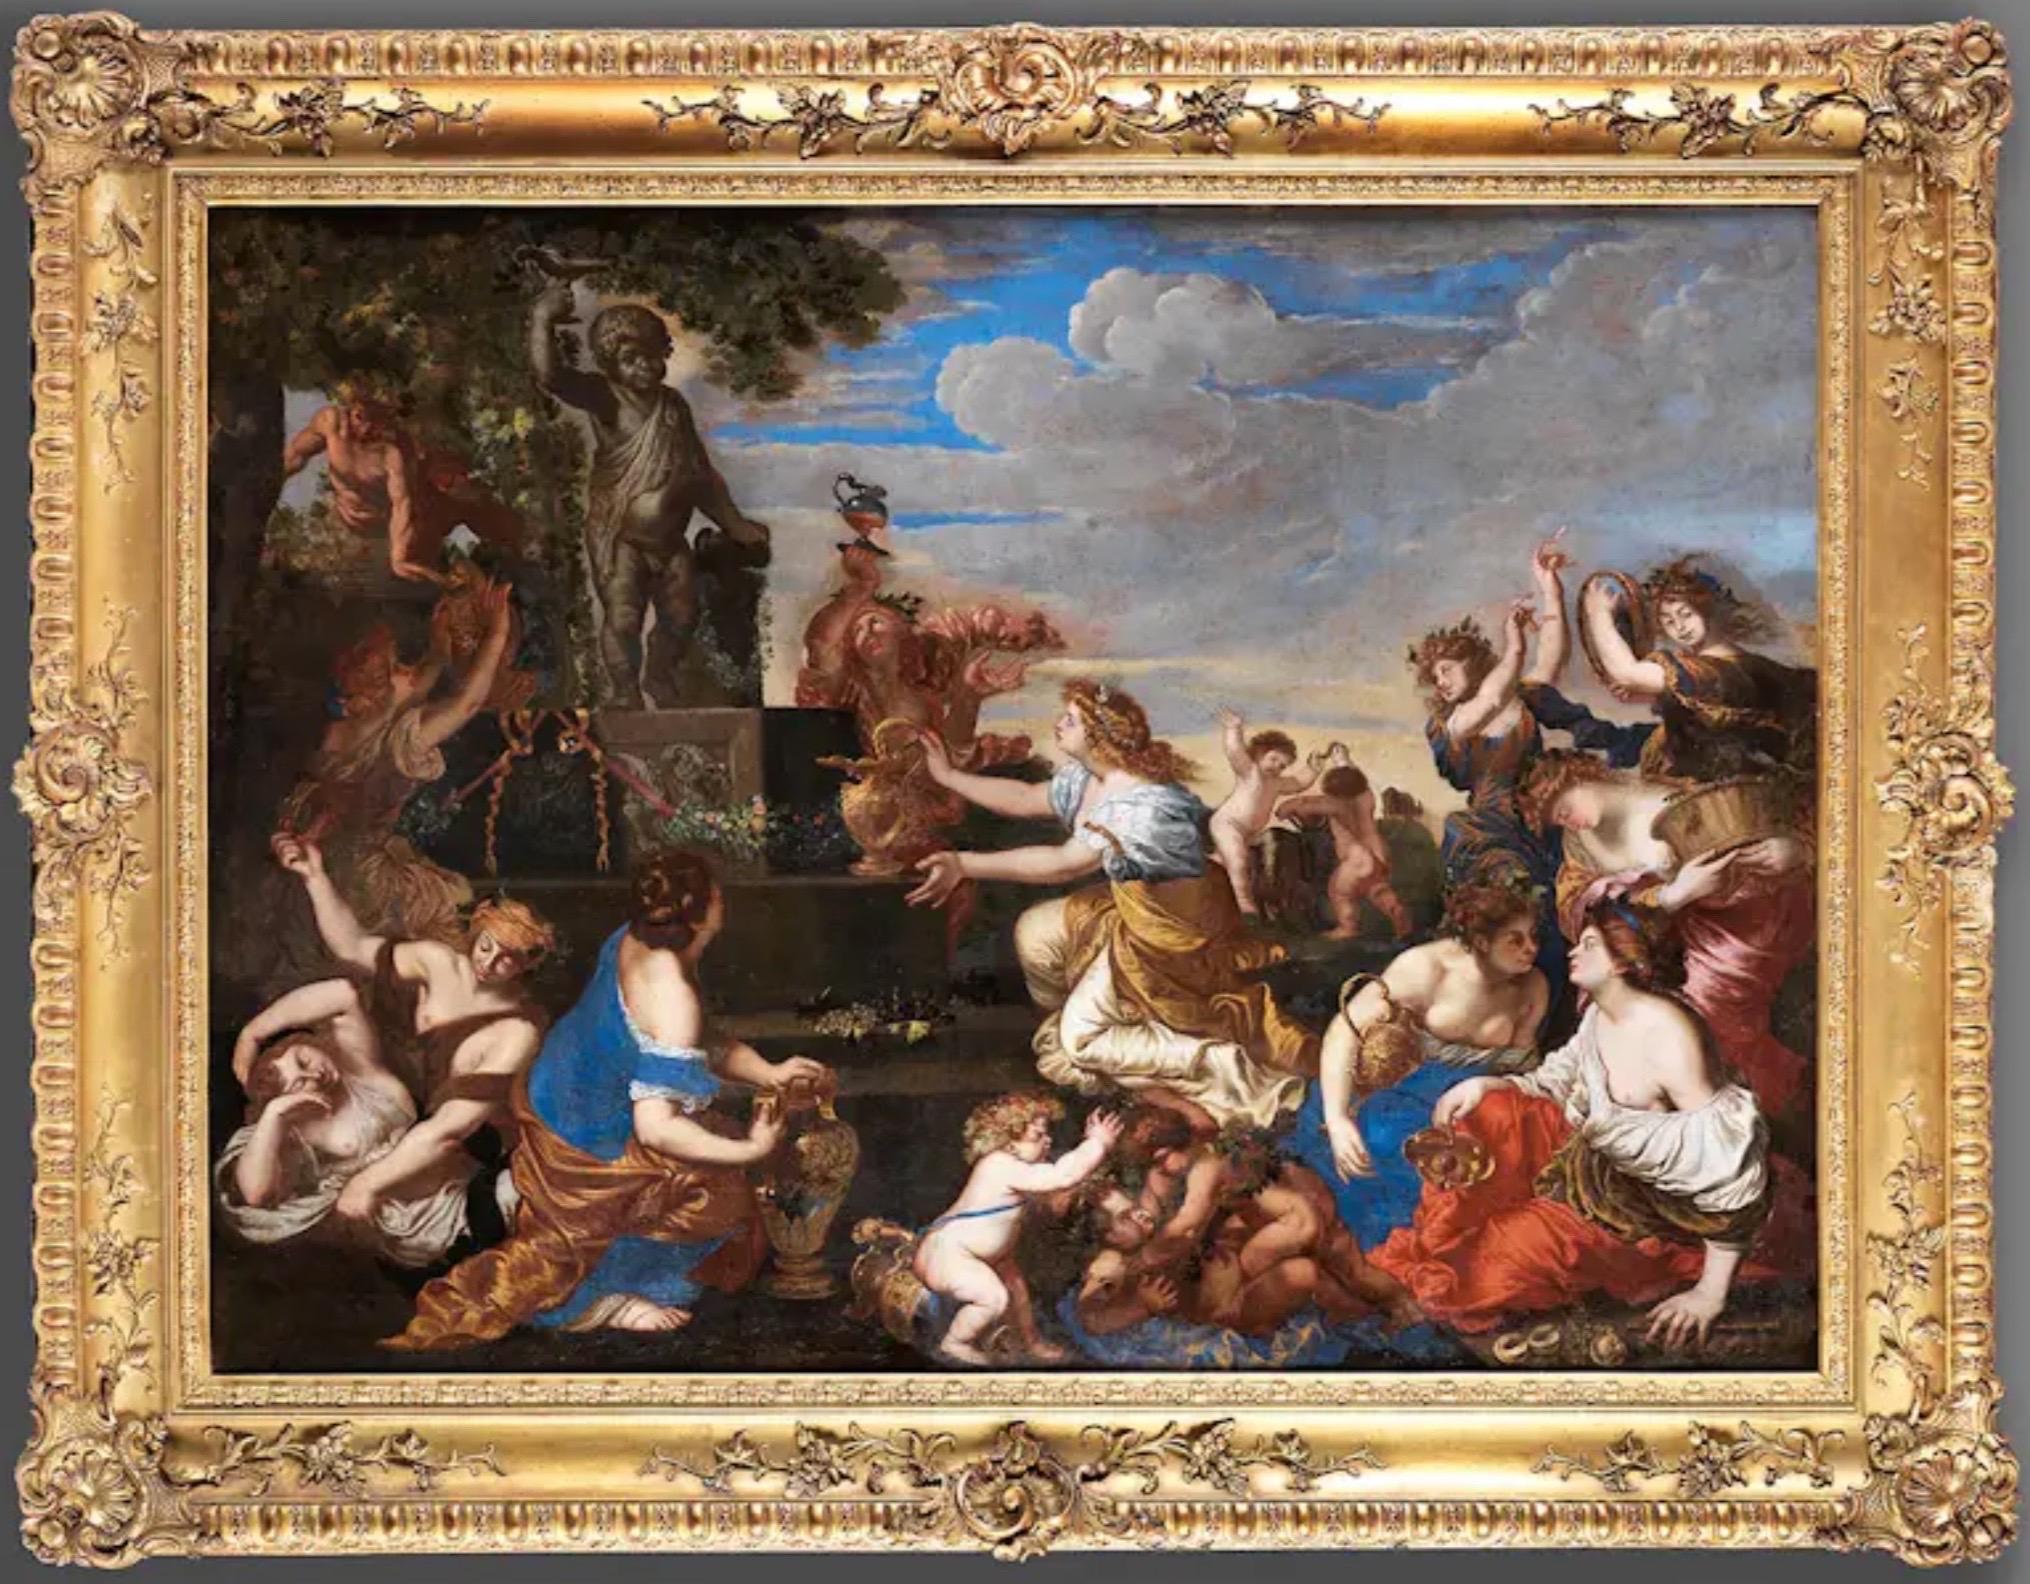 Niccolò De Simone Landscape Painting – Großer alter Meister des 17. Jahrhunderts – Das Fest des Bacchus – Poussin-Feierlichkeiten